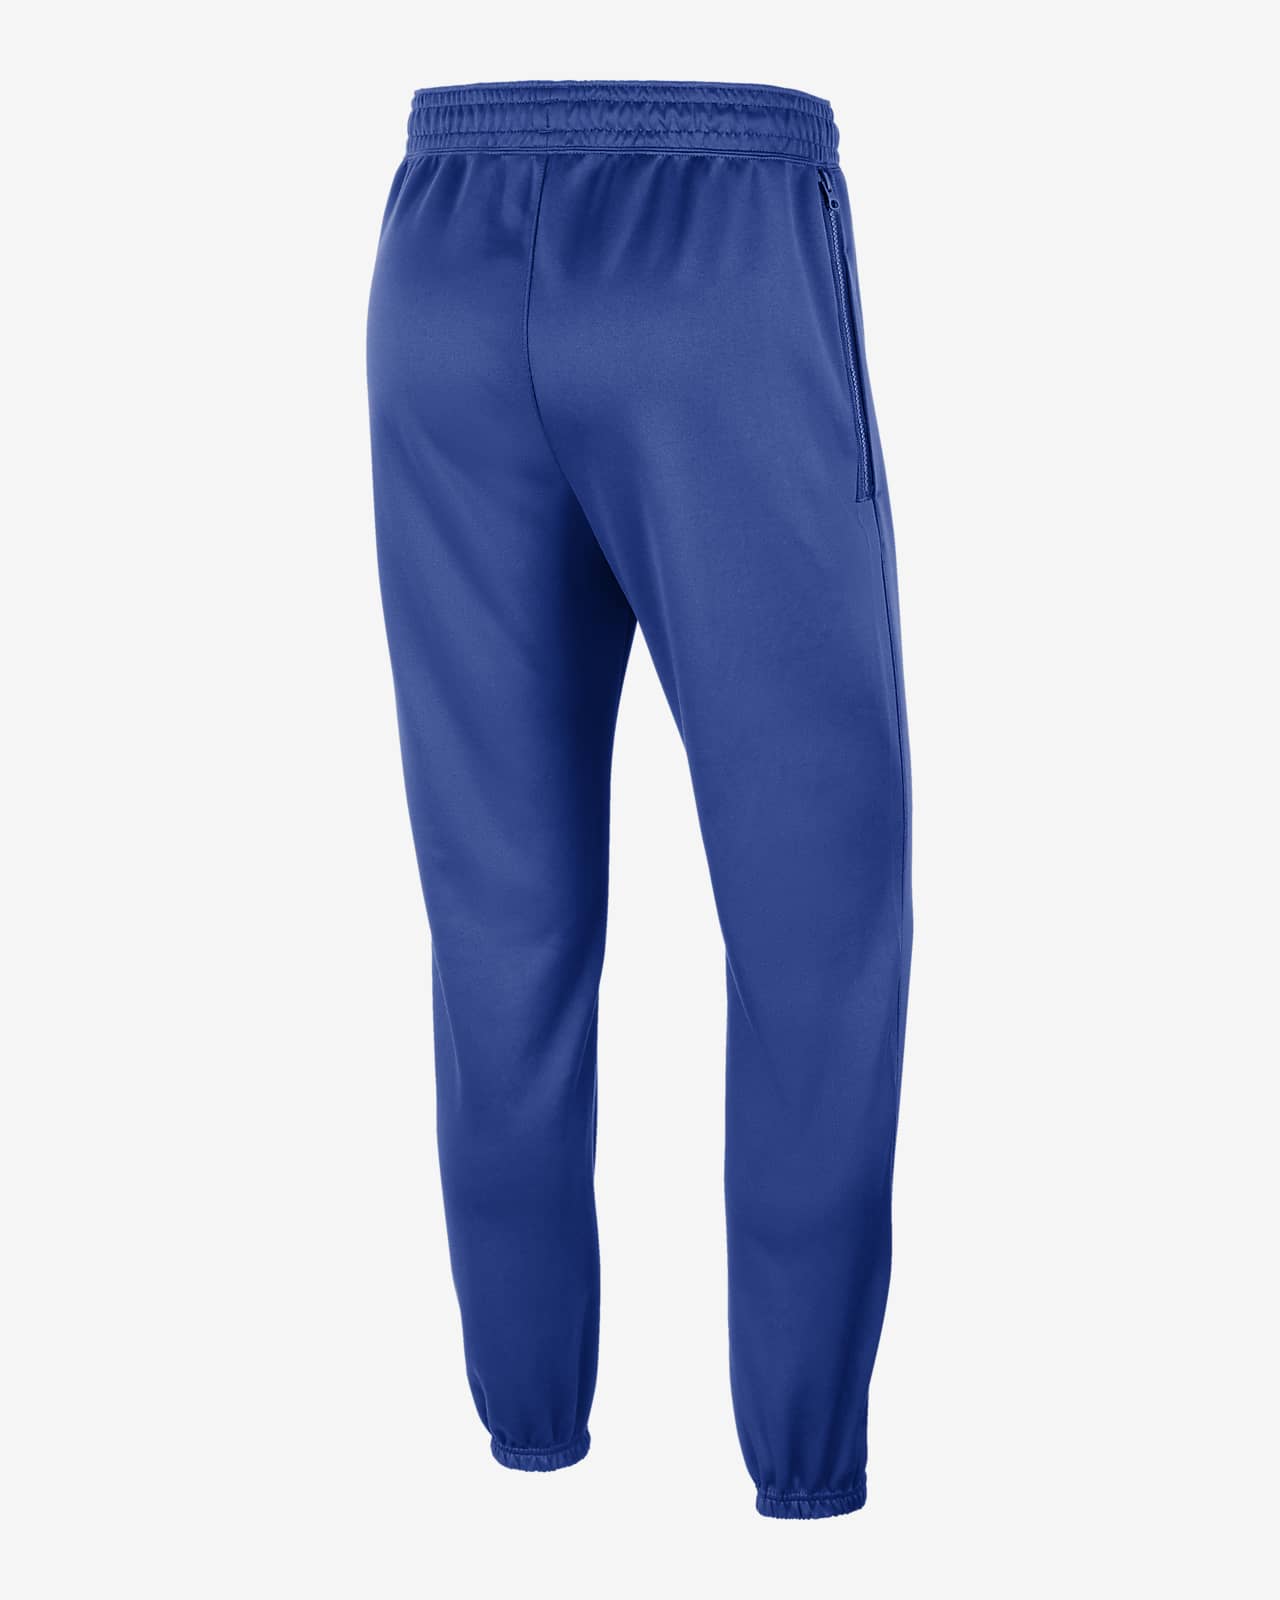 Official New York Knicks Ladies Pants, Leggings, Pajama Pants